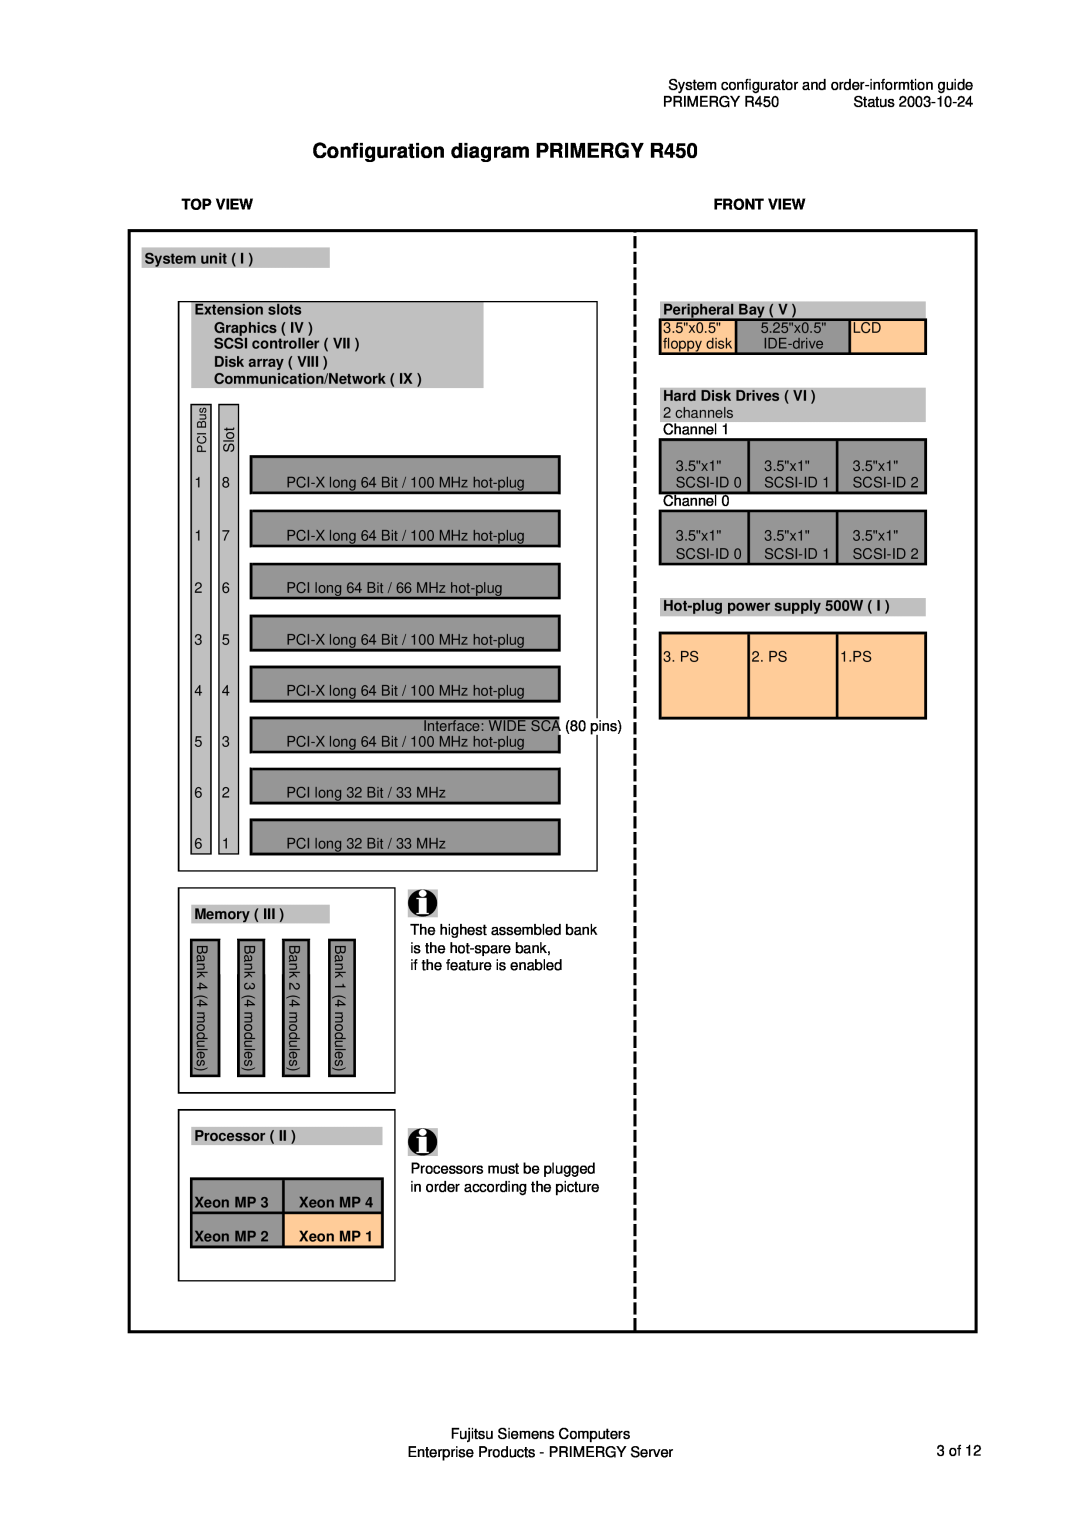 Fujitsu manual Configuration diagram PRIMERGY R450, Memory 